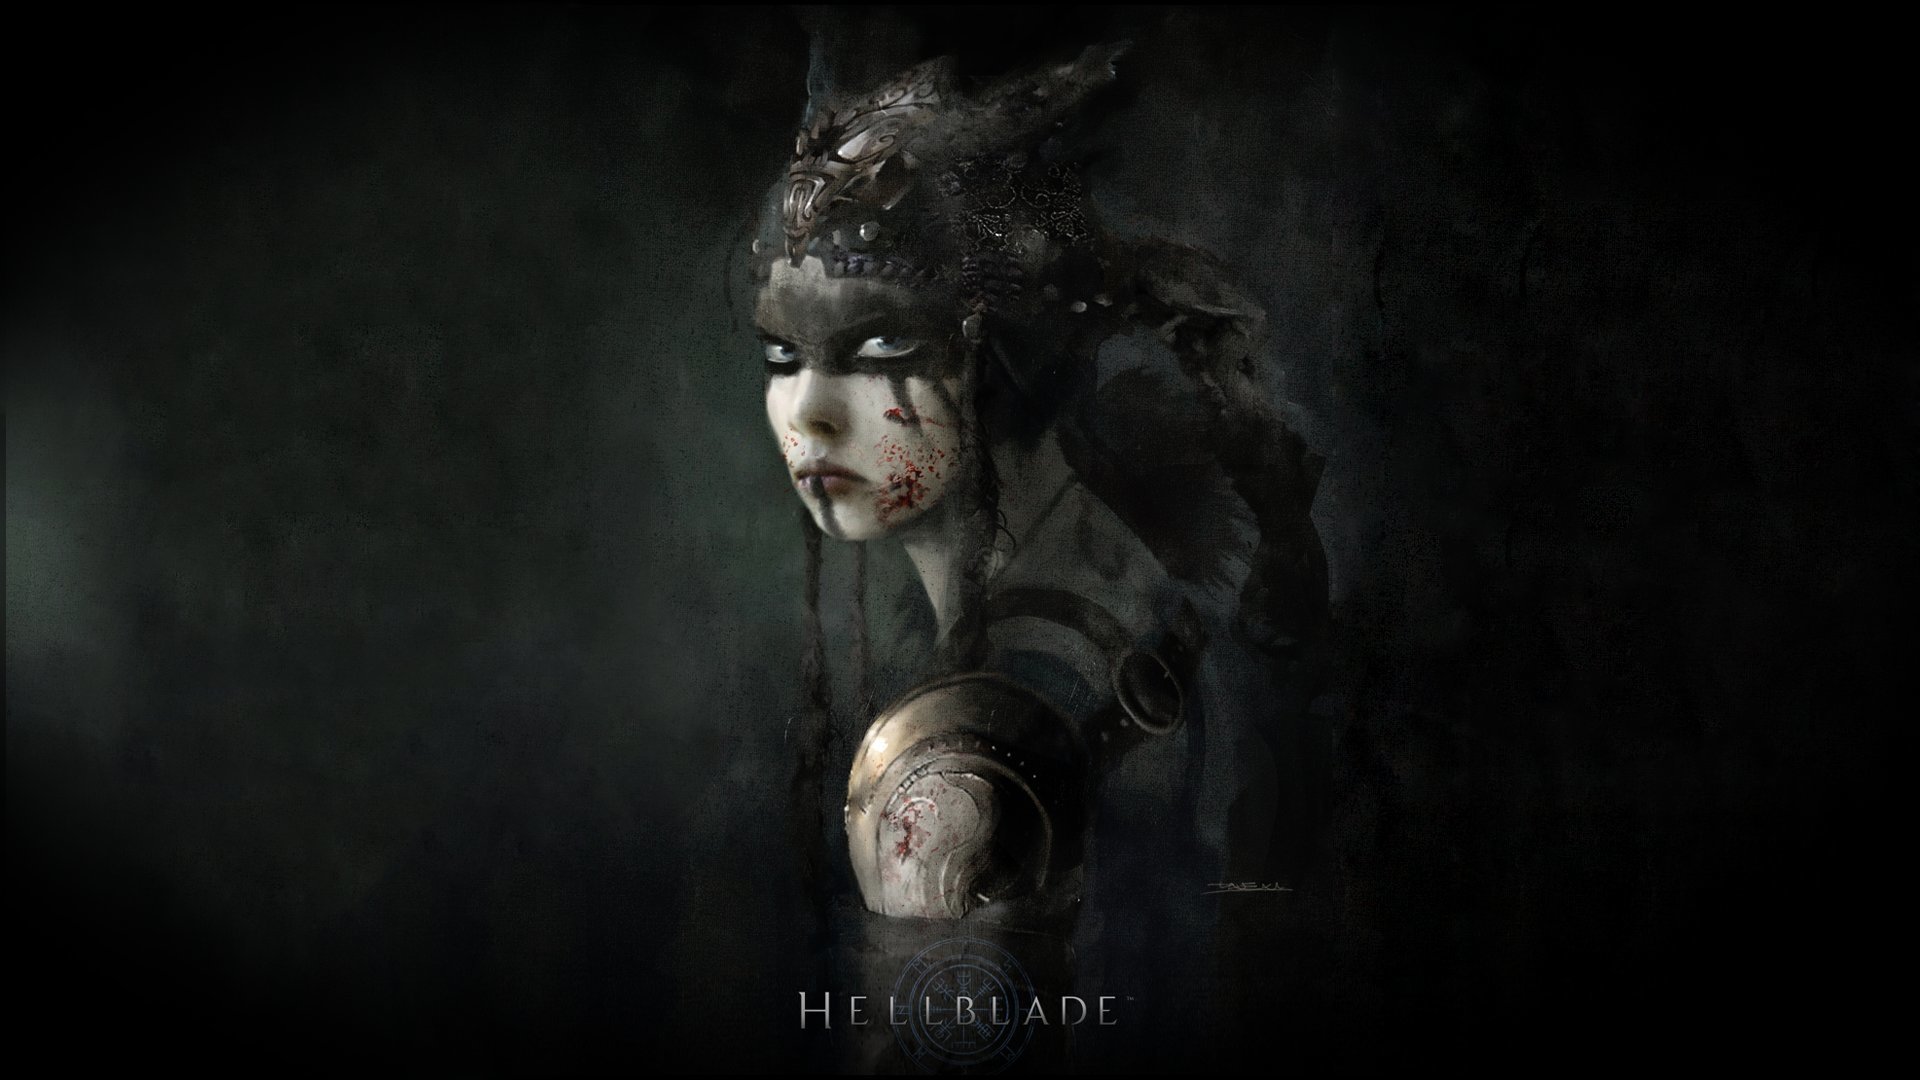 Hellblade: Senua's Sacrifice Wallpapers